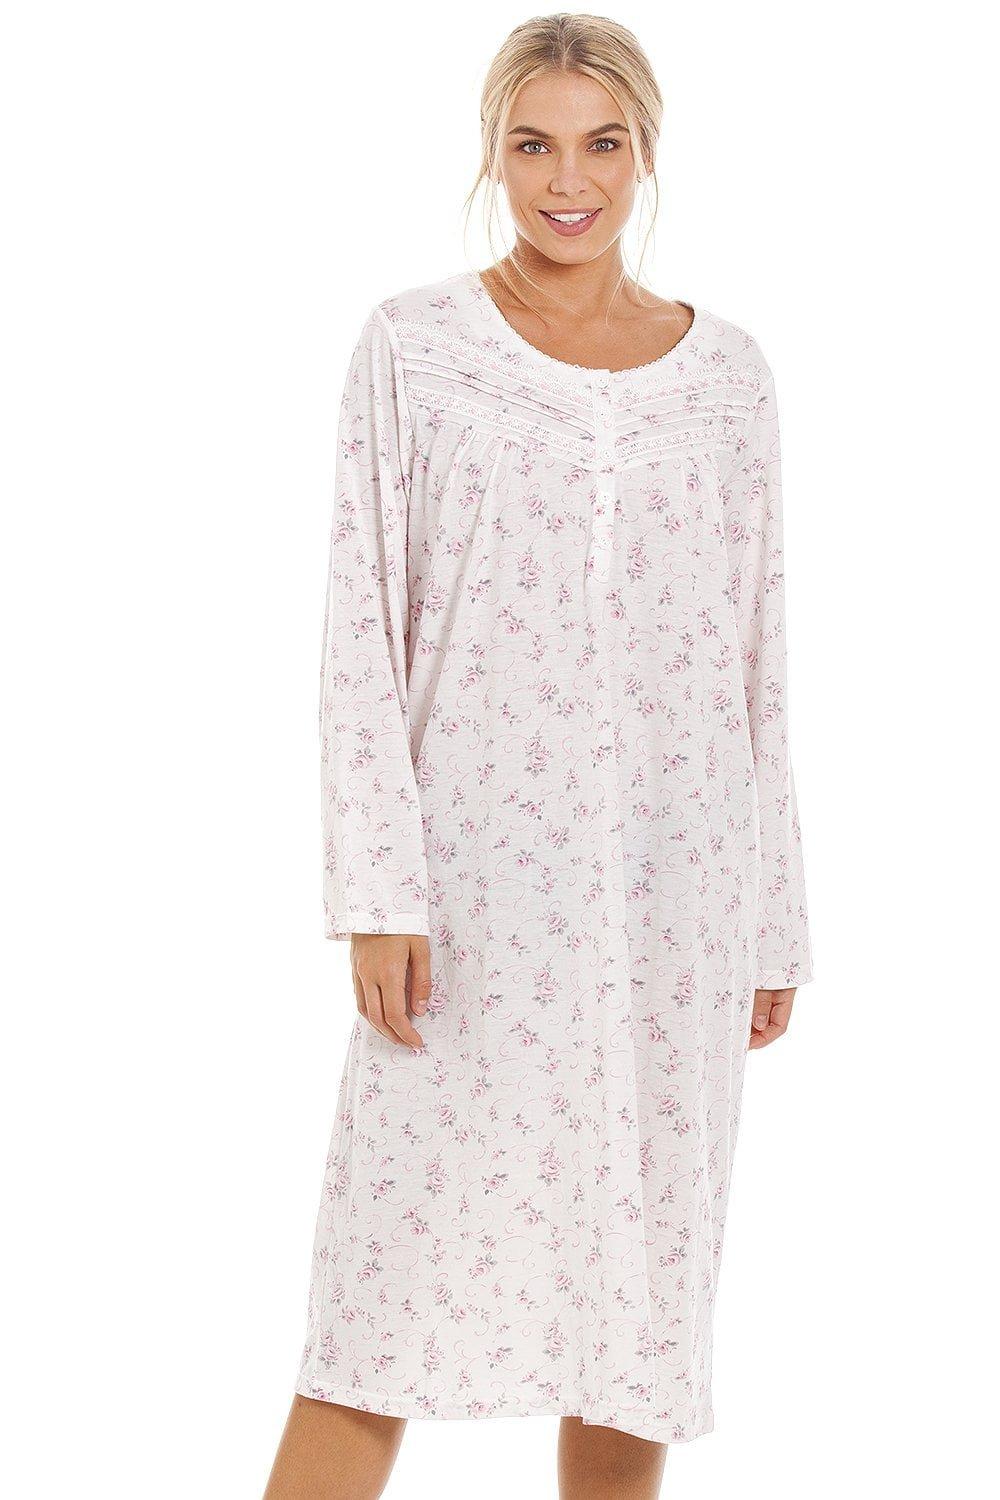 Classic Rose Print Long Sleeve Nightdress